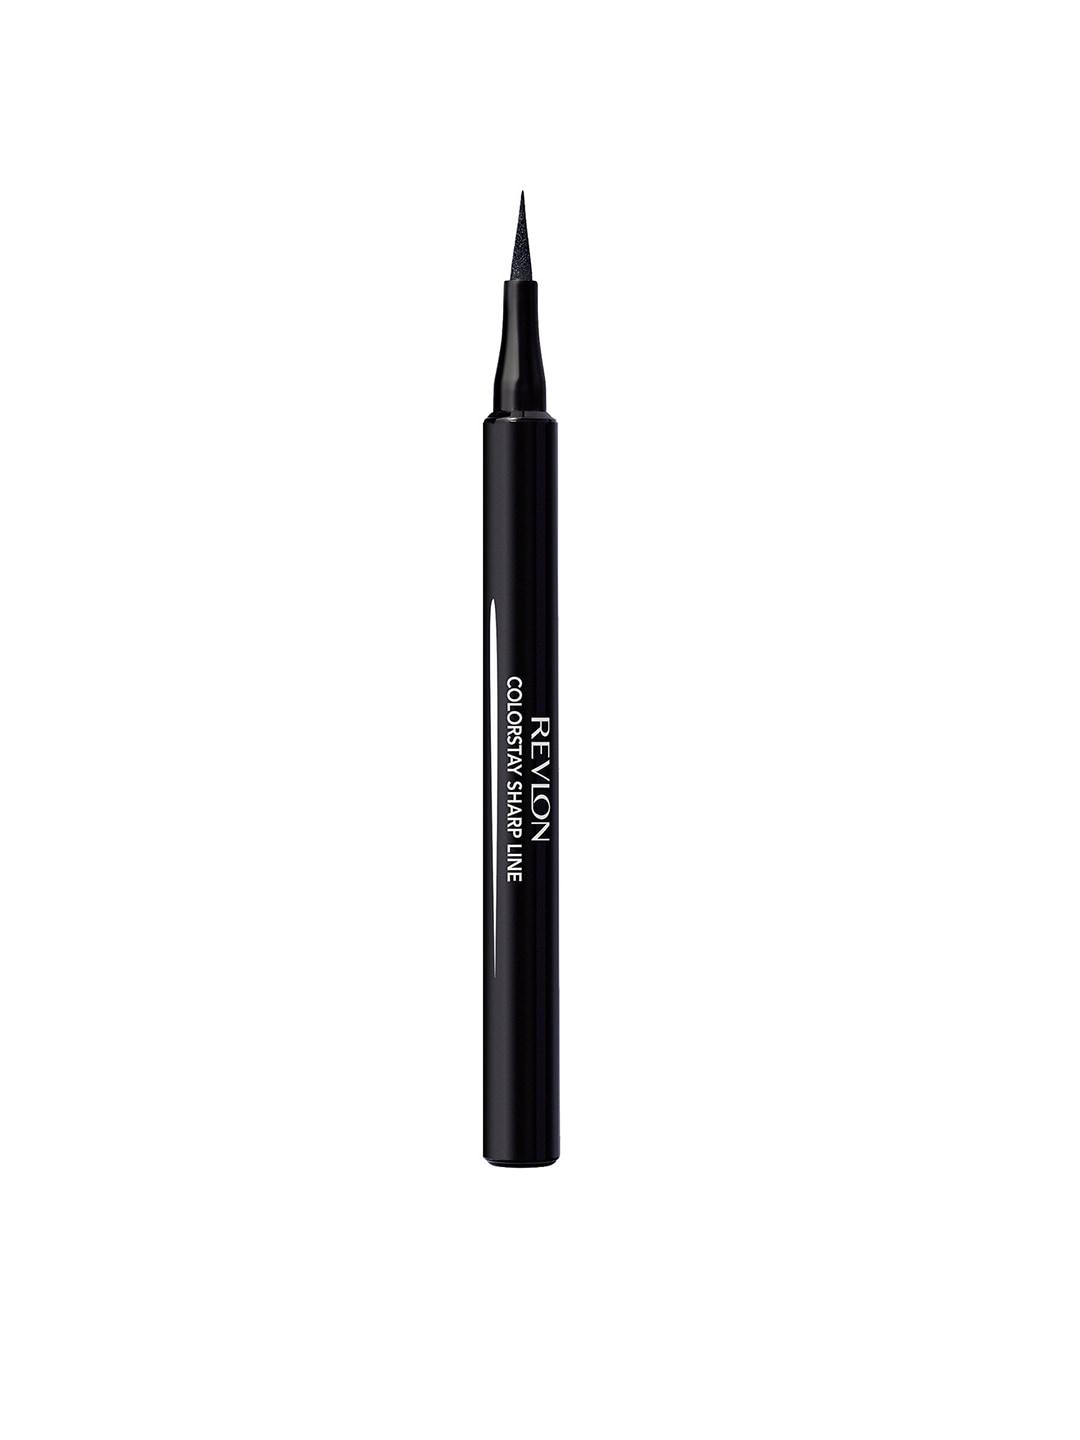 Revlon Colorstay Dramatic Wear Liquid Eye Pen - Sharp Line - Blackest Black